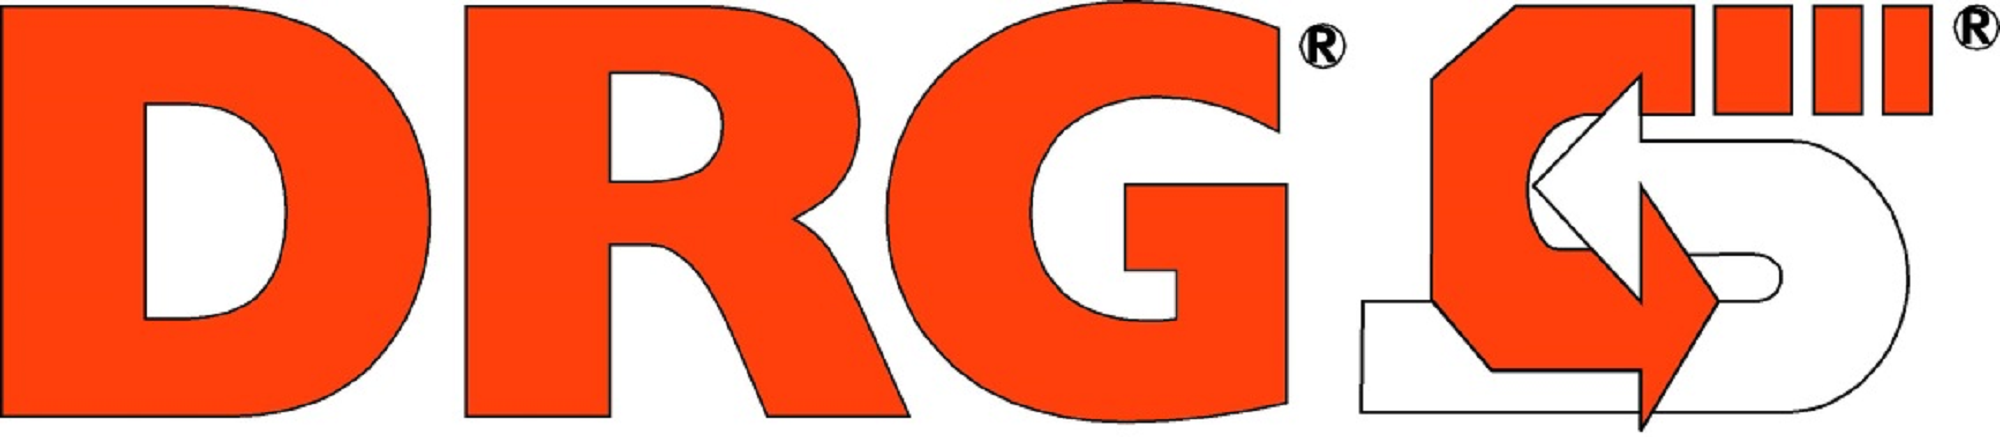 DRG International, Inc.